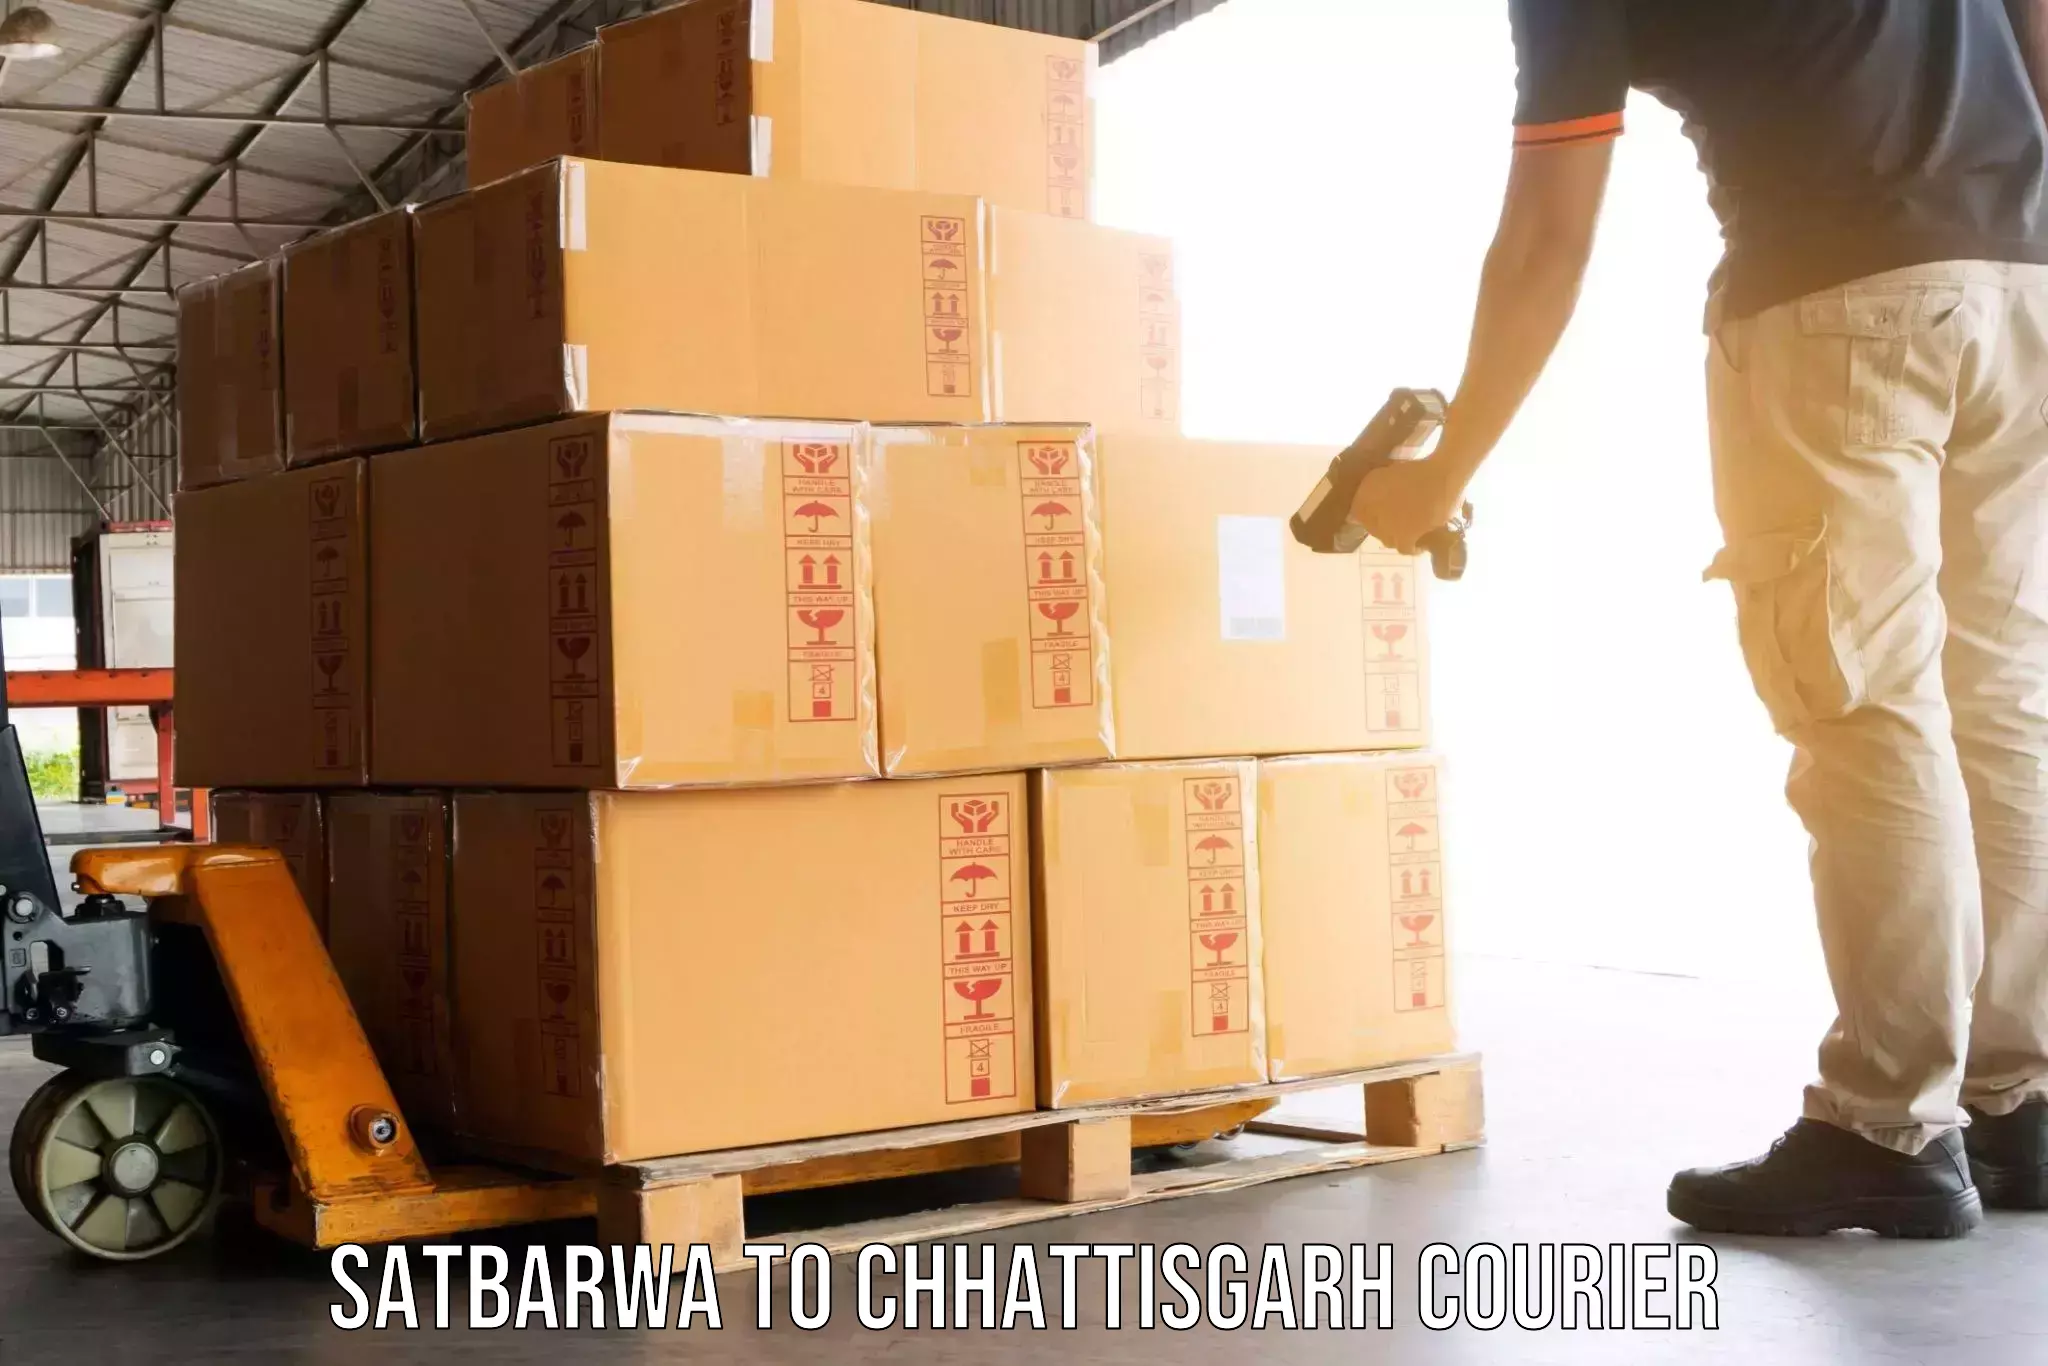 Quality relocation assistance Satbarwa to Patna Chhattisgarh